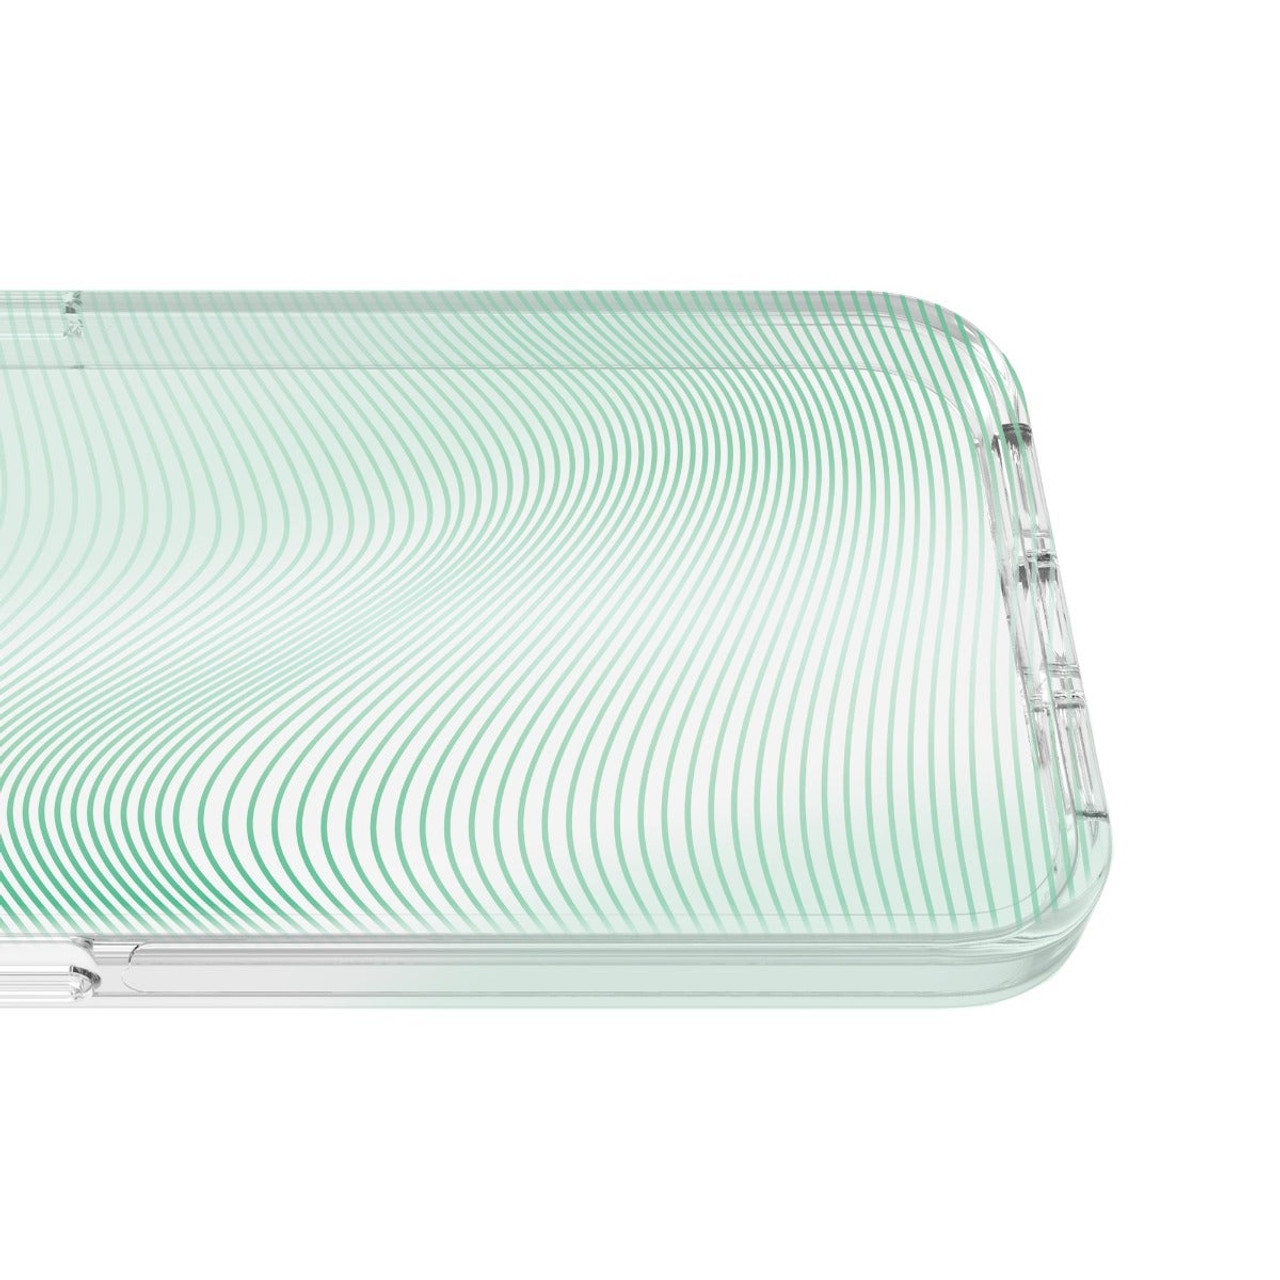 Case Carcasa Gear4 para iPhone 14 Pro Transparente Crystal Palace